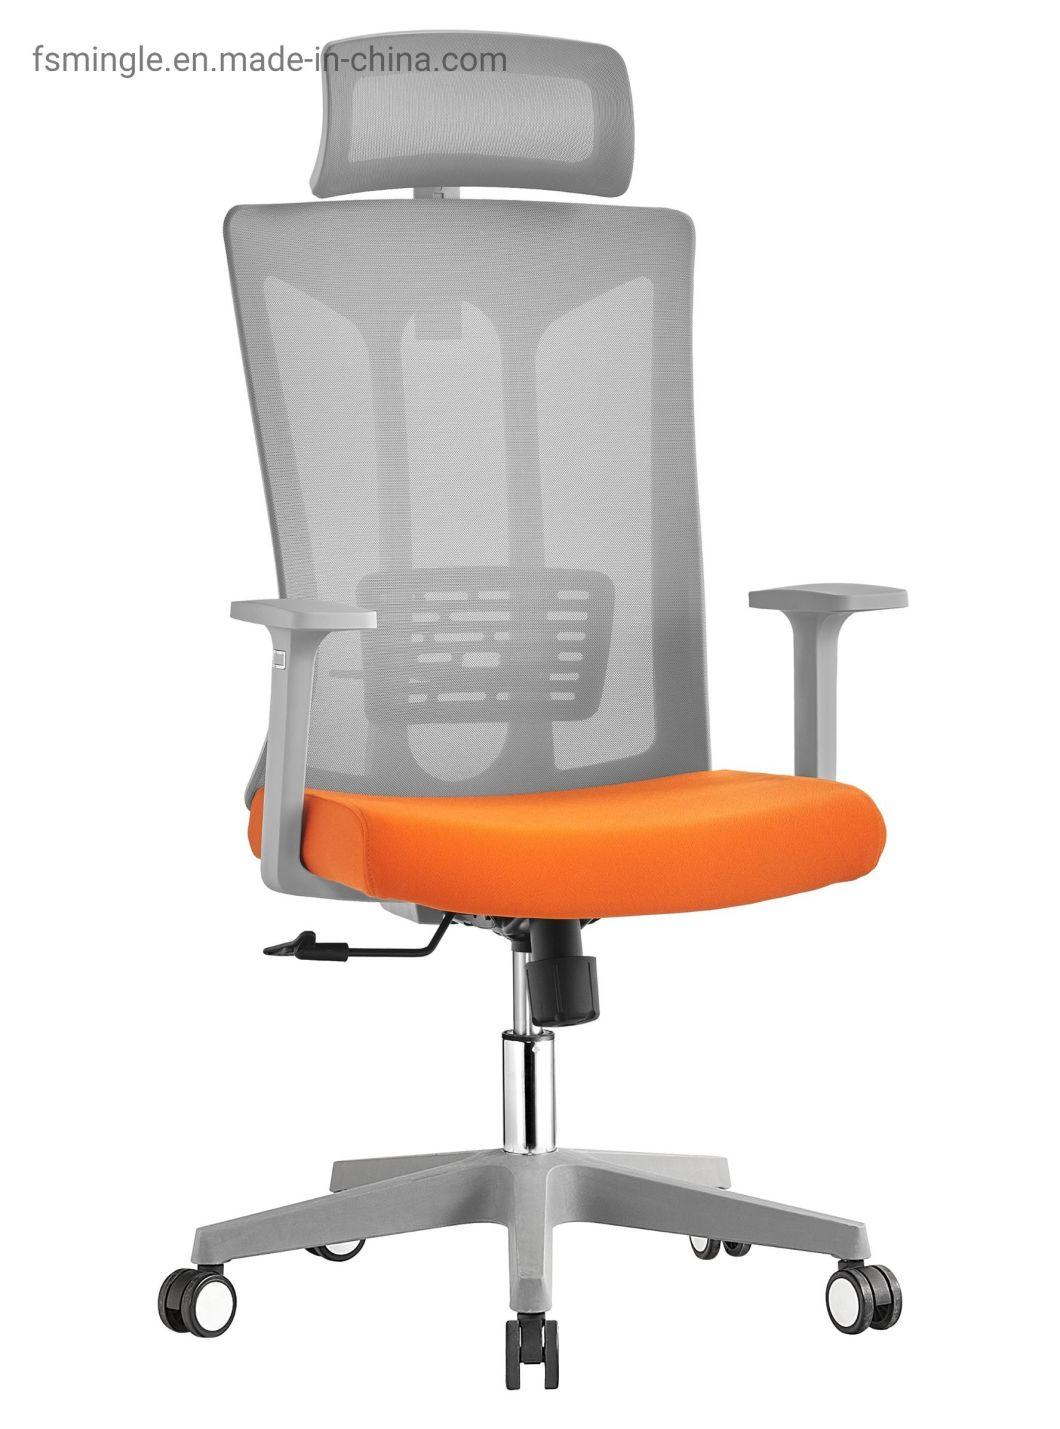 Modern Design Adjustable High Back Executive Chair Ergonomic Mesh Office Chair with Headrest